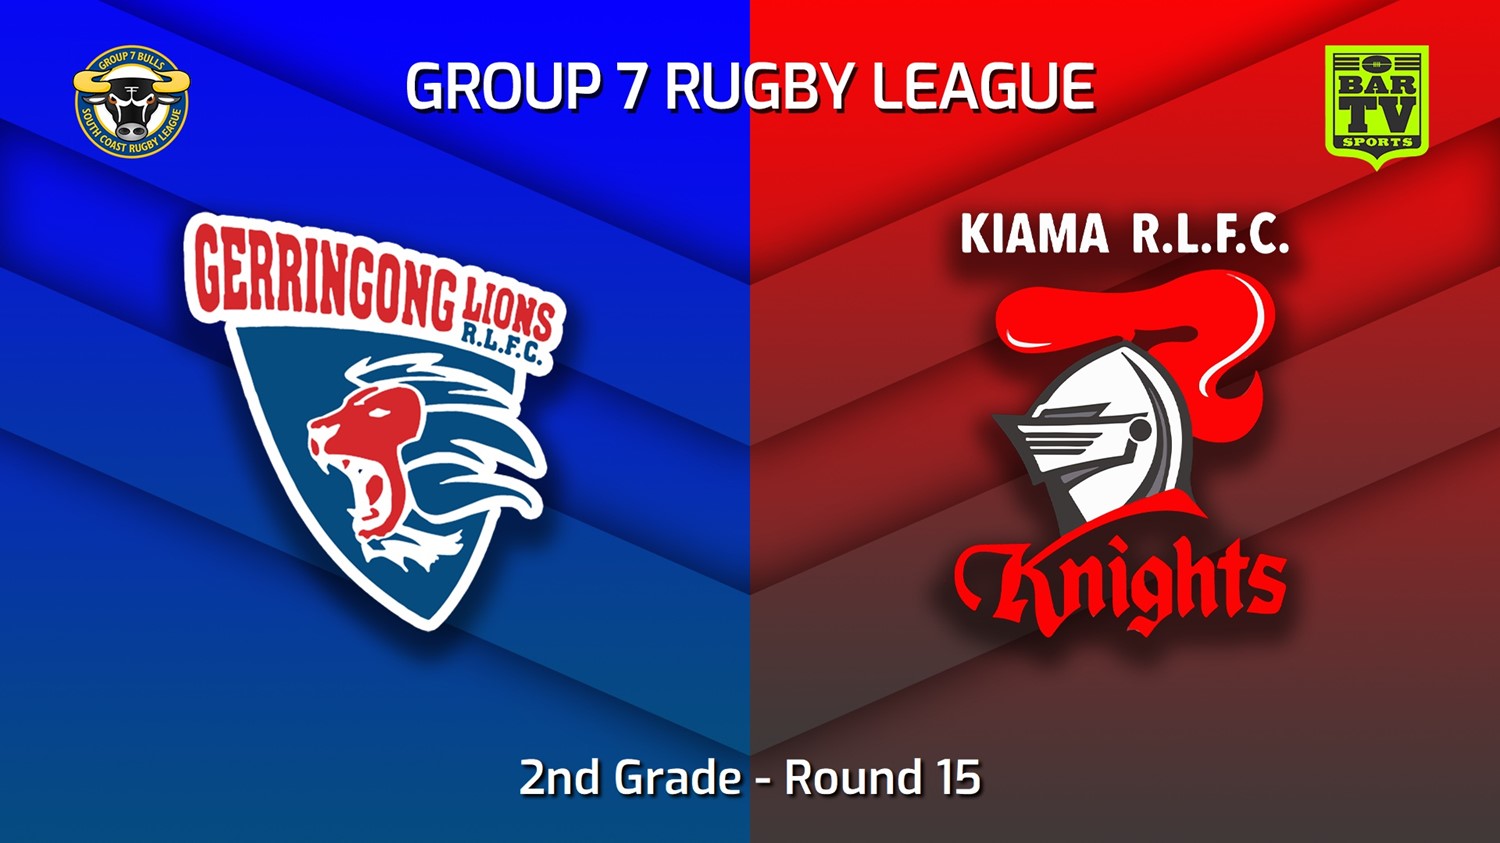 220806-South Coast Round 15 - 2nd Grade - Gerringong Lions v Kiama Knights Slate Image